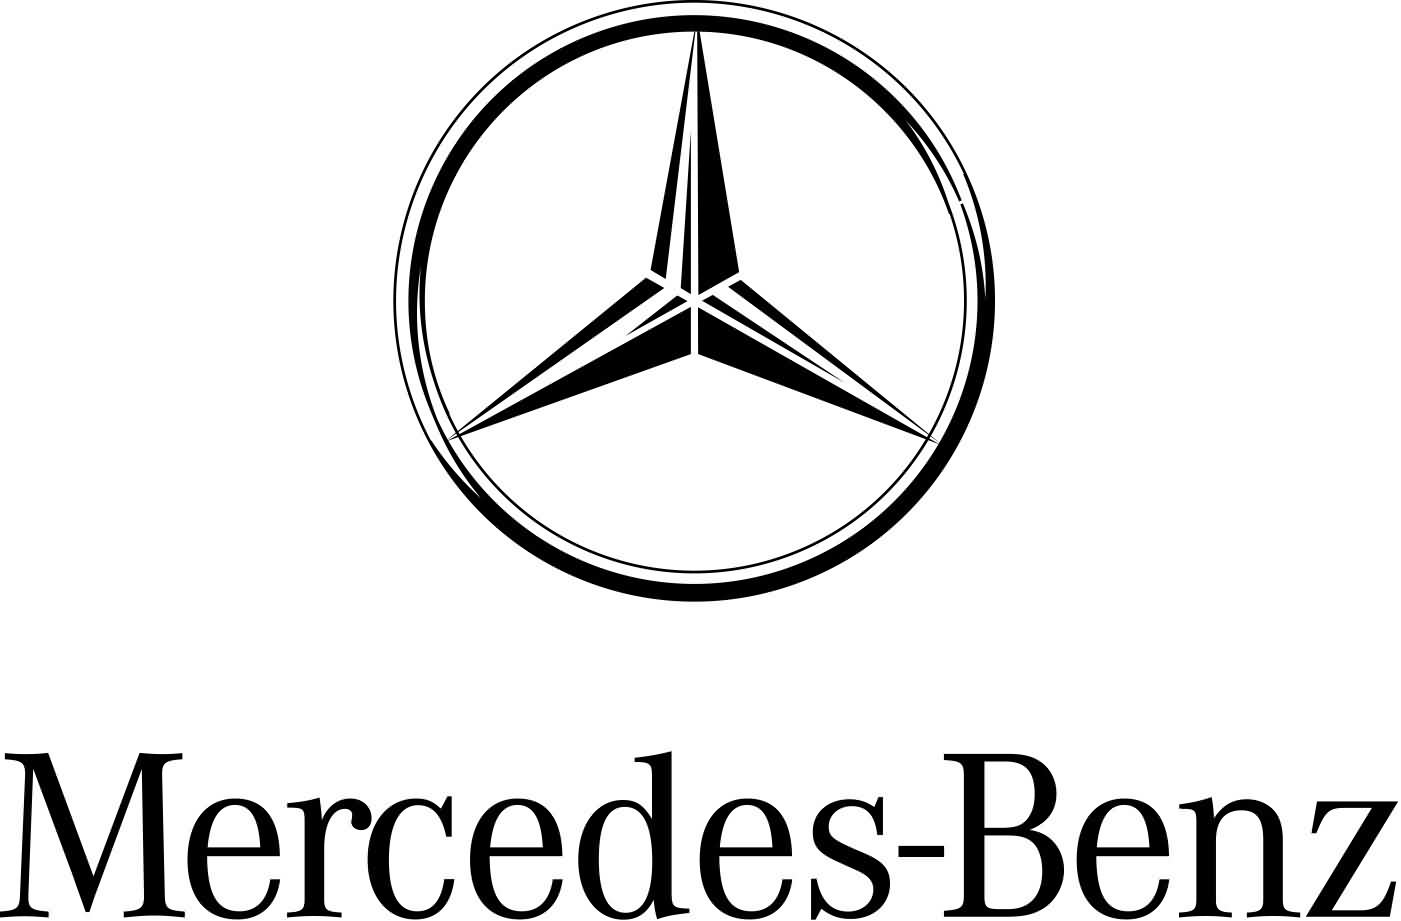 http://www.car-brand-names.com/wp-content/uploads/2015/05/Mercedes-Benz-logo-3.jpg